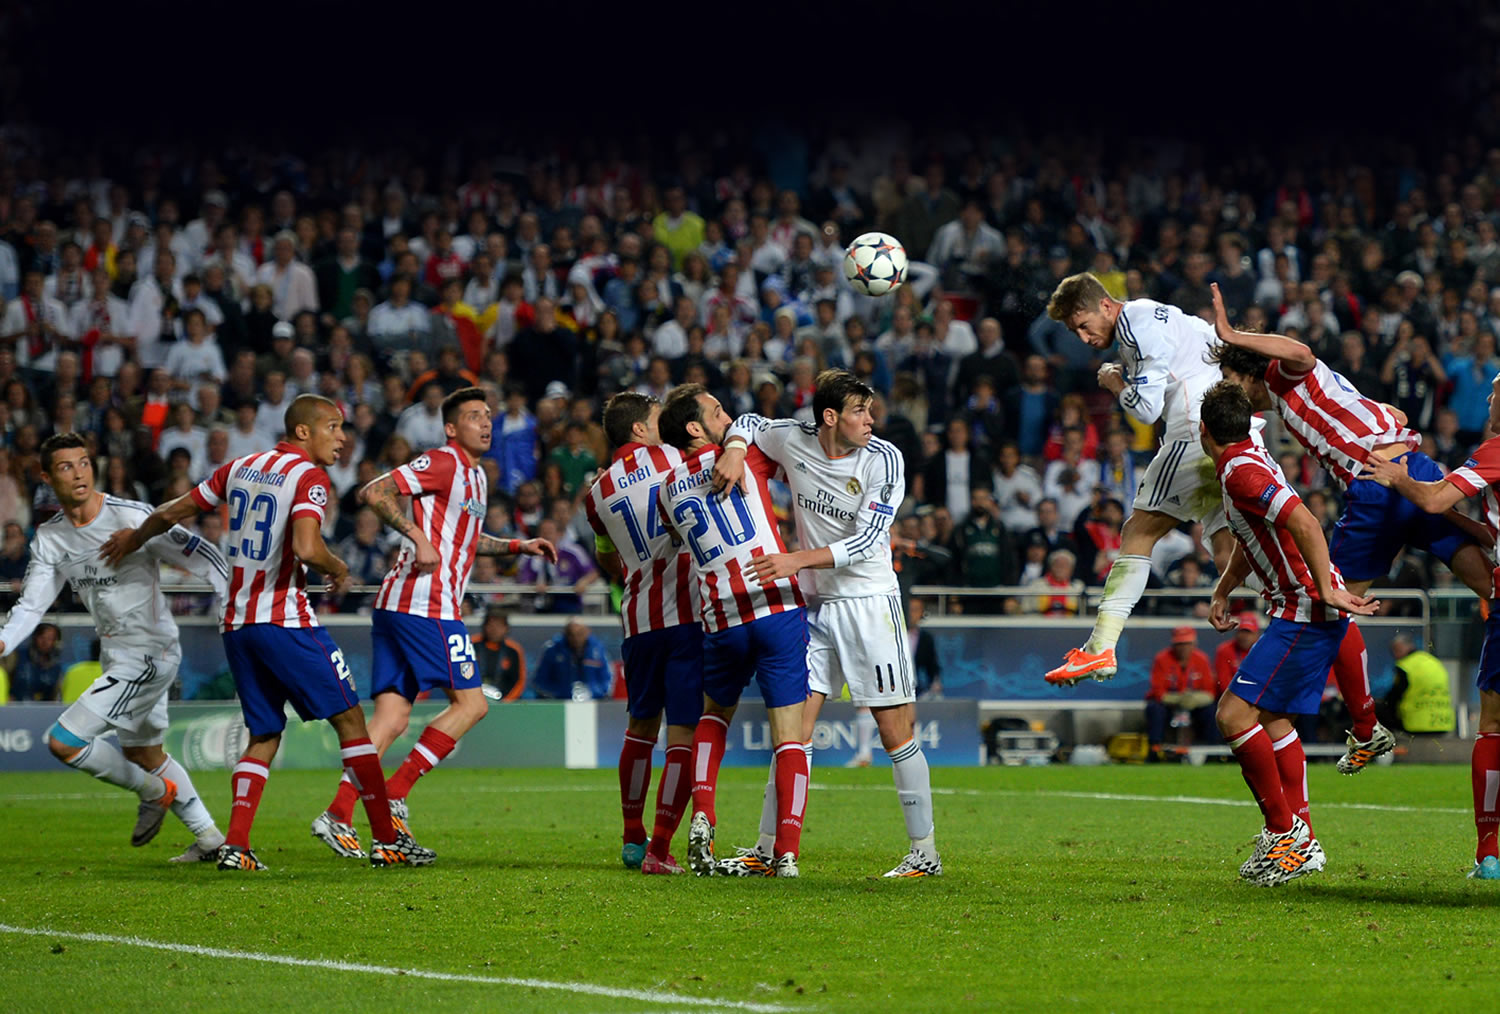 Champions League 2014 ¡La Décima! | Real Madrid CF1500 x 1014